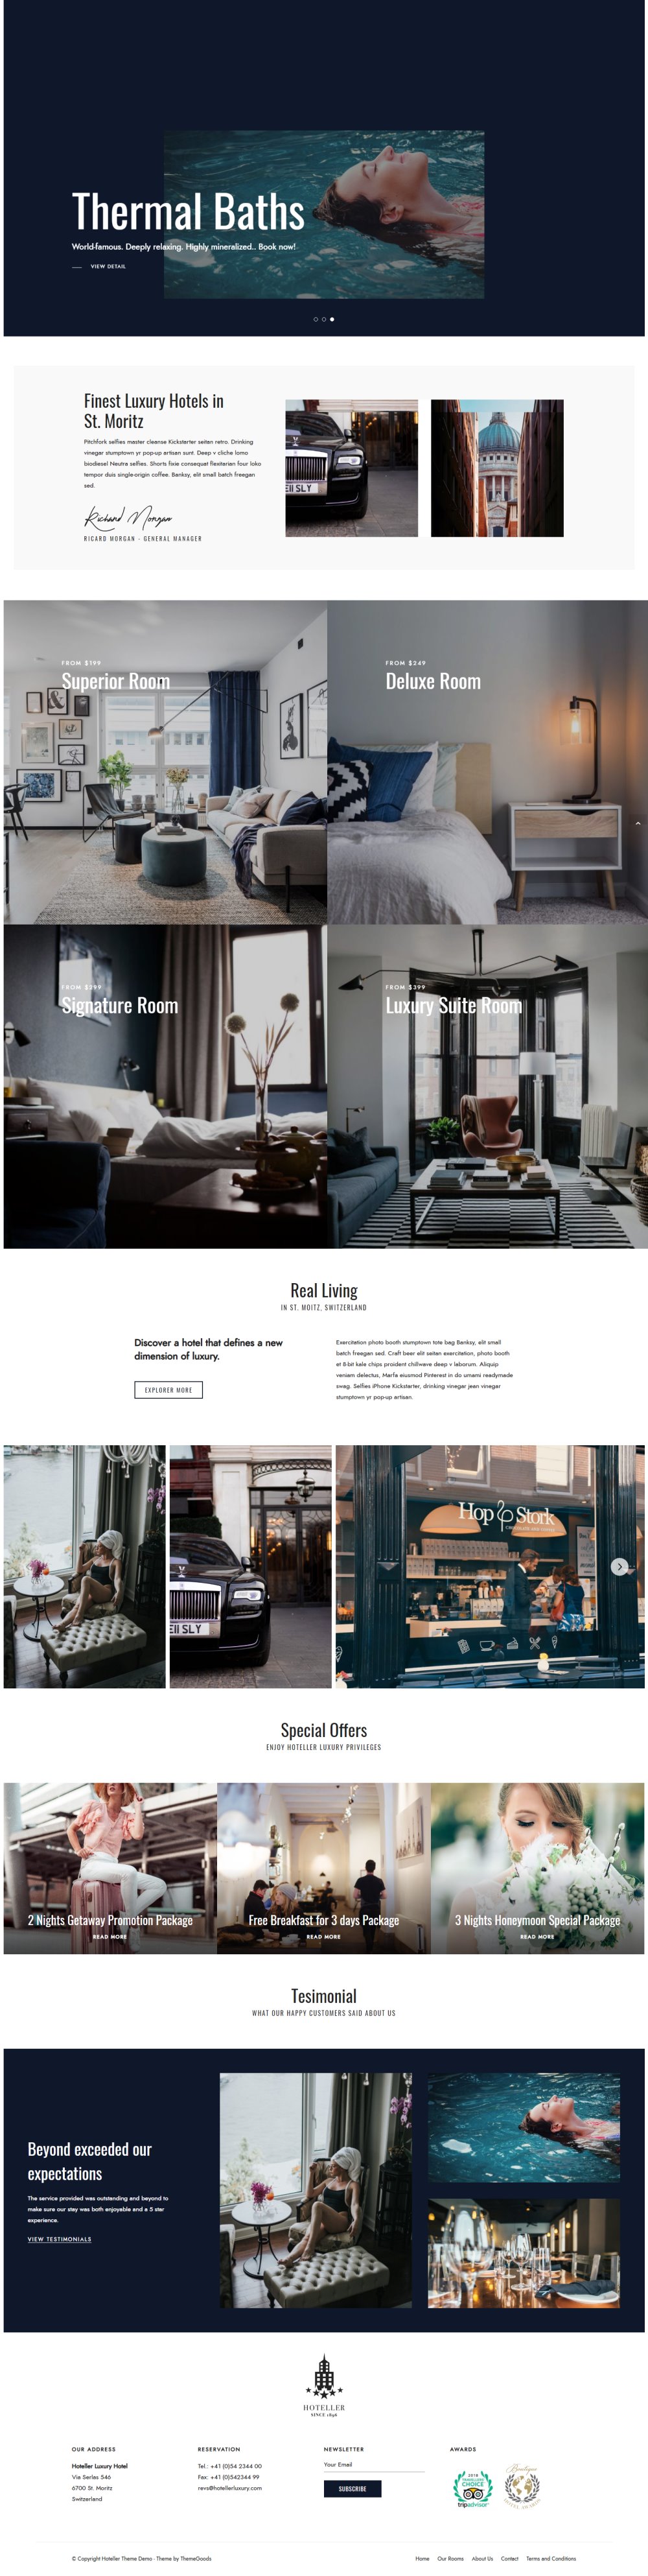 Hotel-Web-Design-Inspiration-003